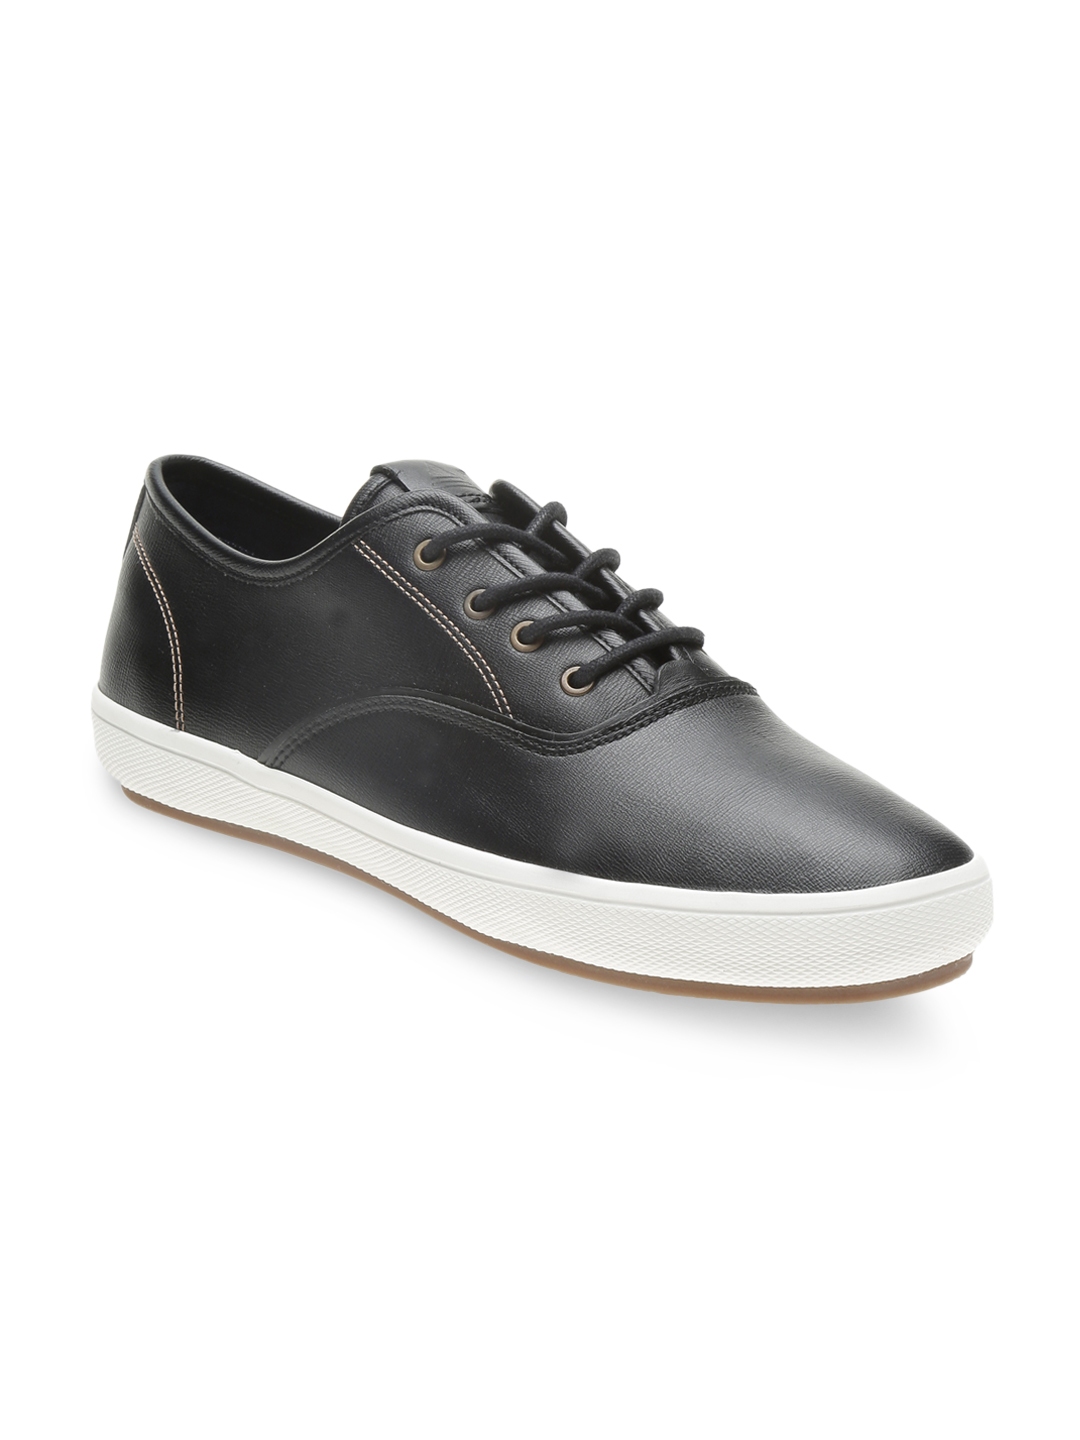 Buy ALDO Men Black Sneakers - Casual Shoes for Men 2442326 | Myntra